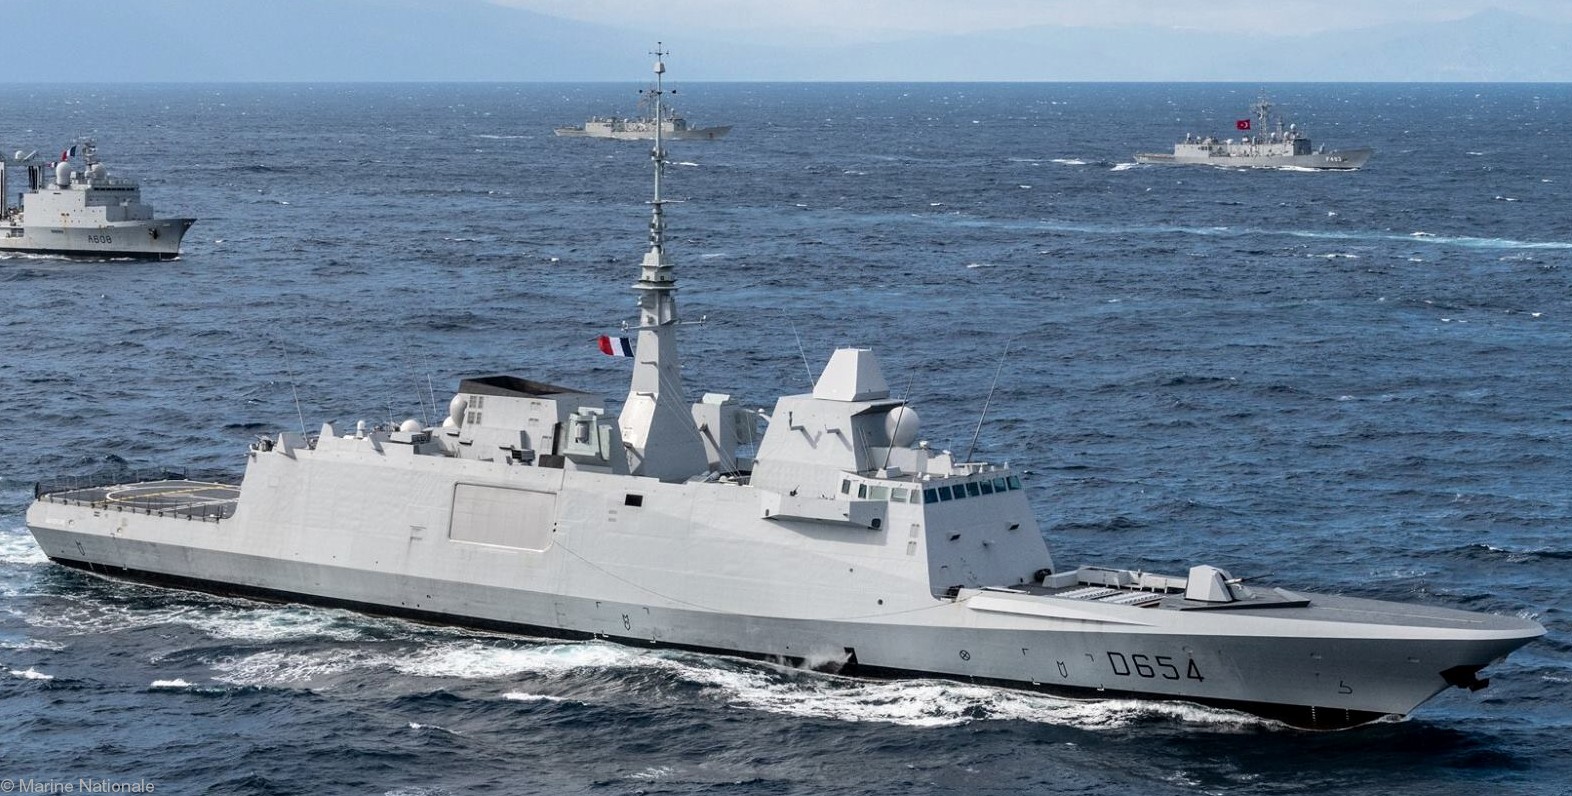 d-654 fs auvergne fremm aquitaine class frigate fregate multi purpose french navy marine nationale 15